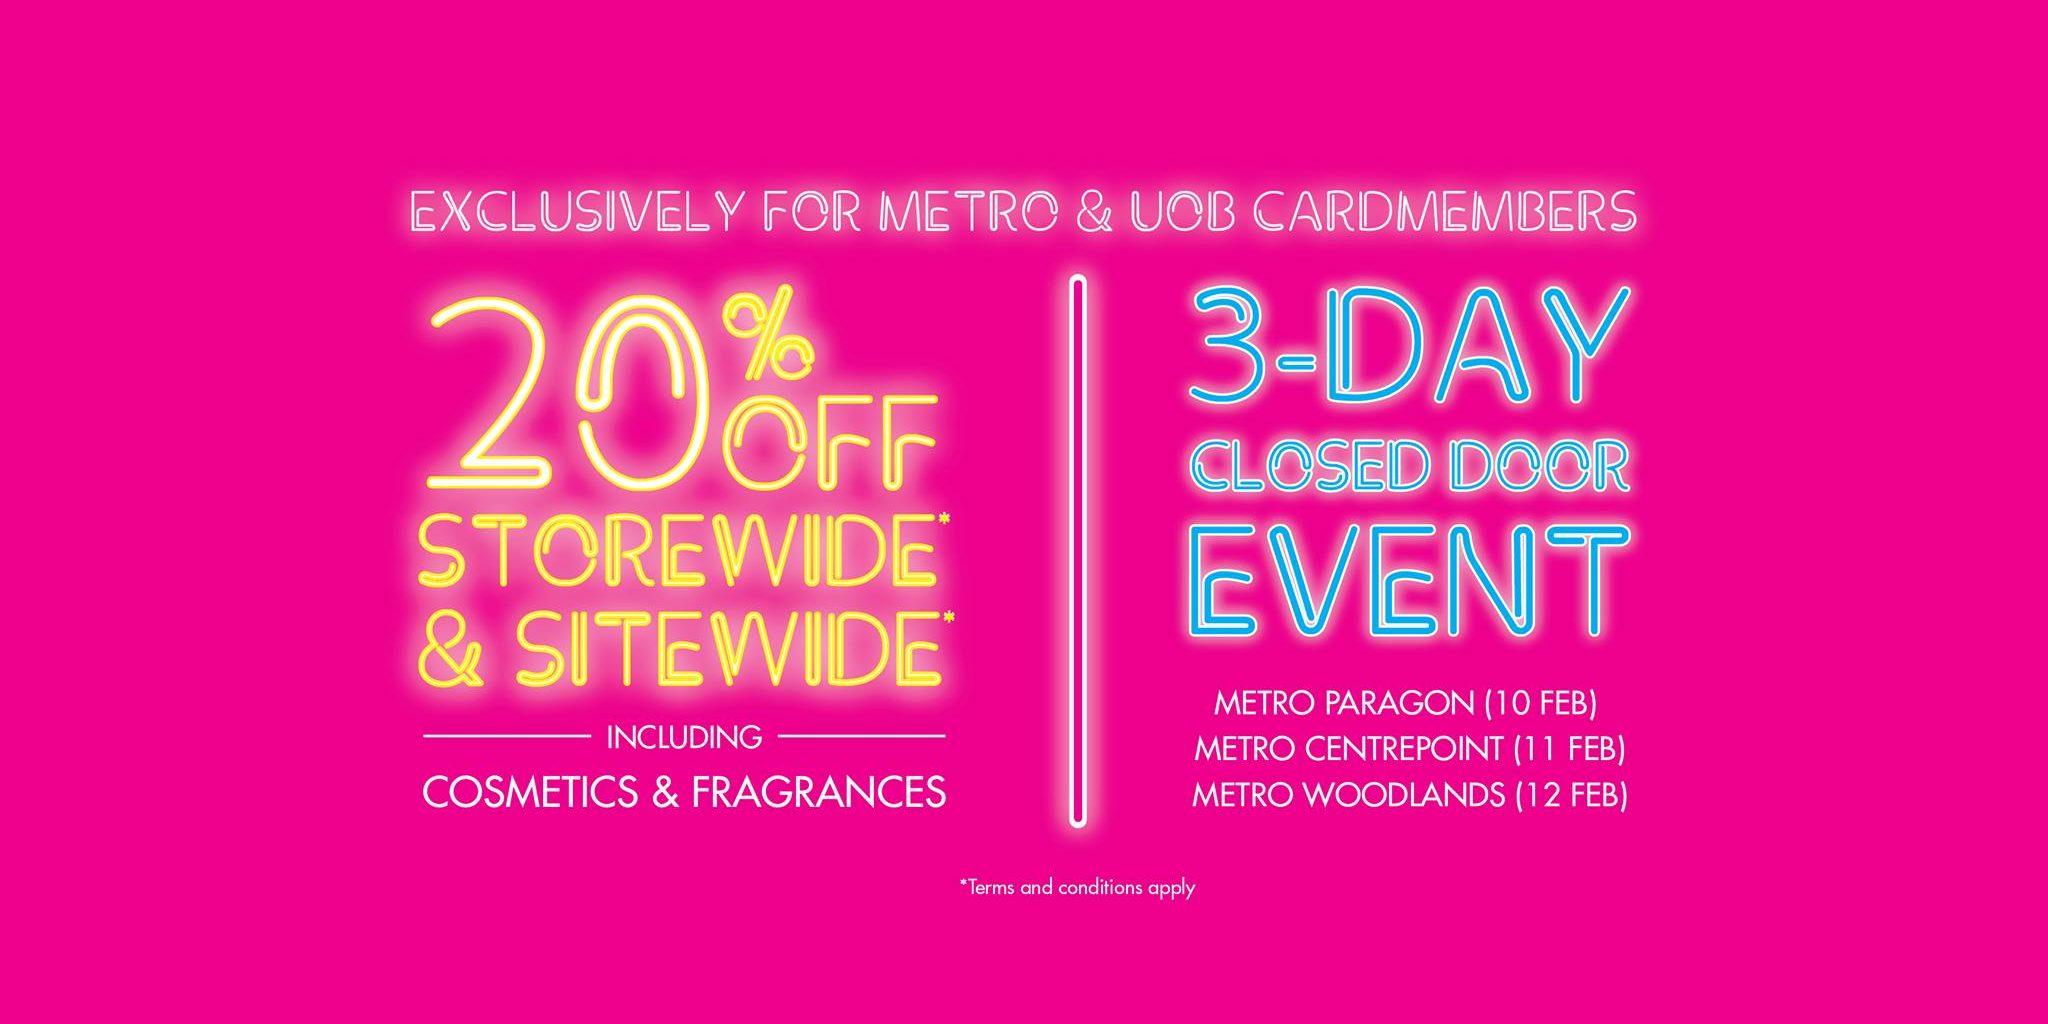 METRO Singapore 3-Day Closed Door Event 20% Off Storewide Promotion 10-12 Feb 2017